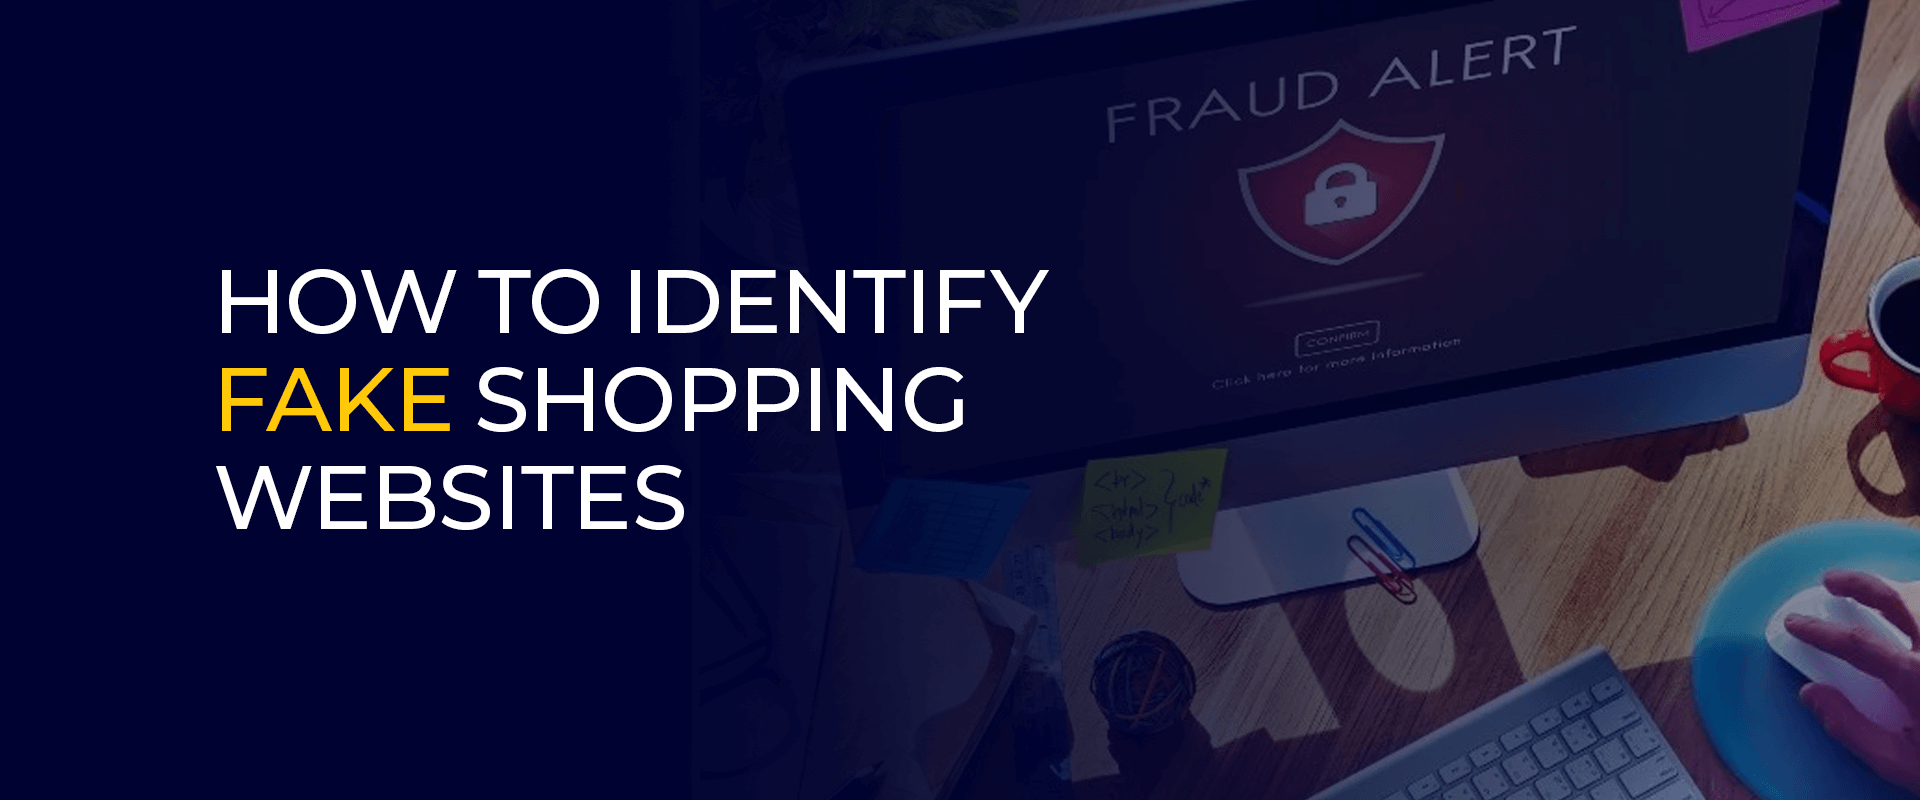 Como identificar sites de compras falsos